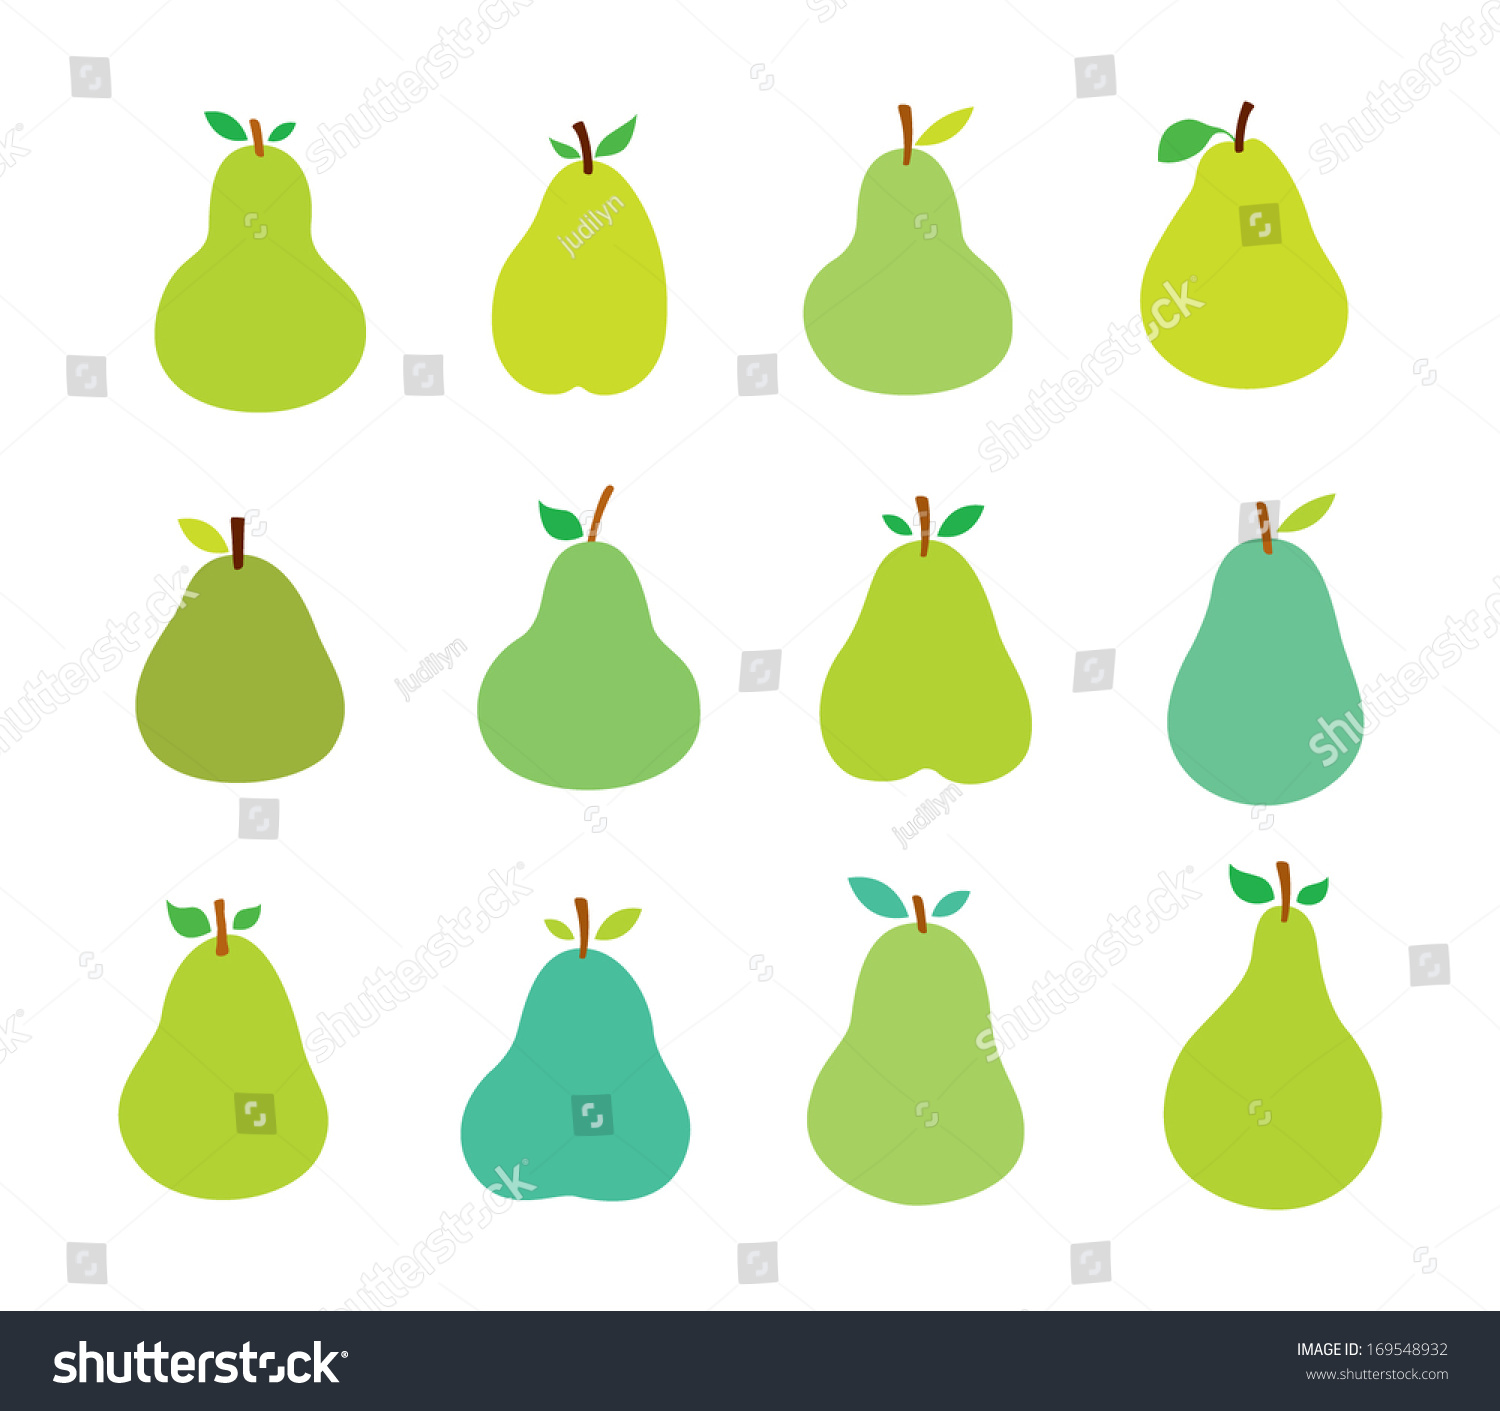 Pear Vector Collection Stock Vector 169548932 - Shutterstock